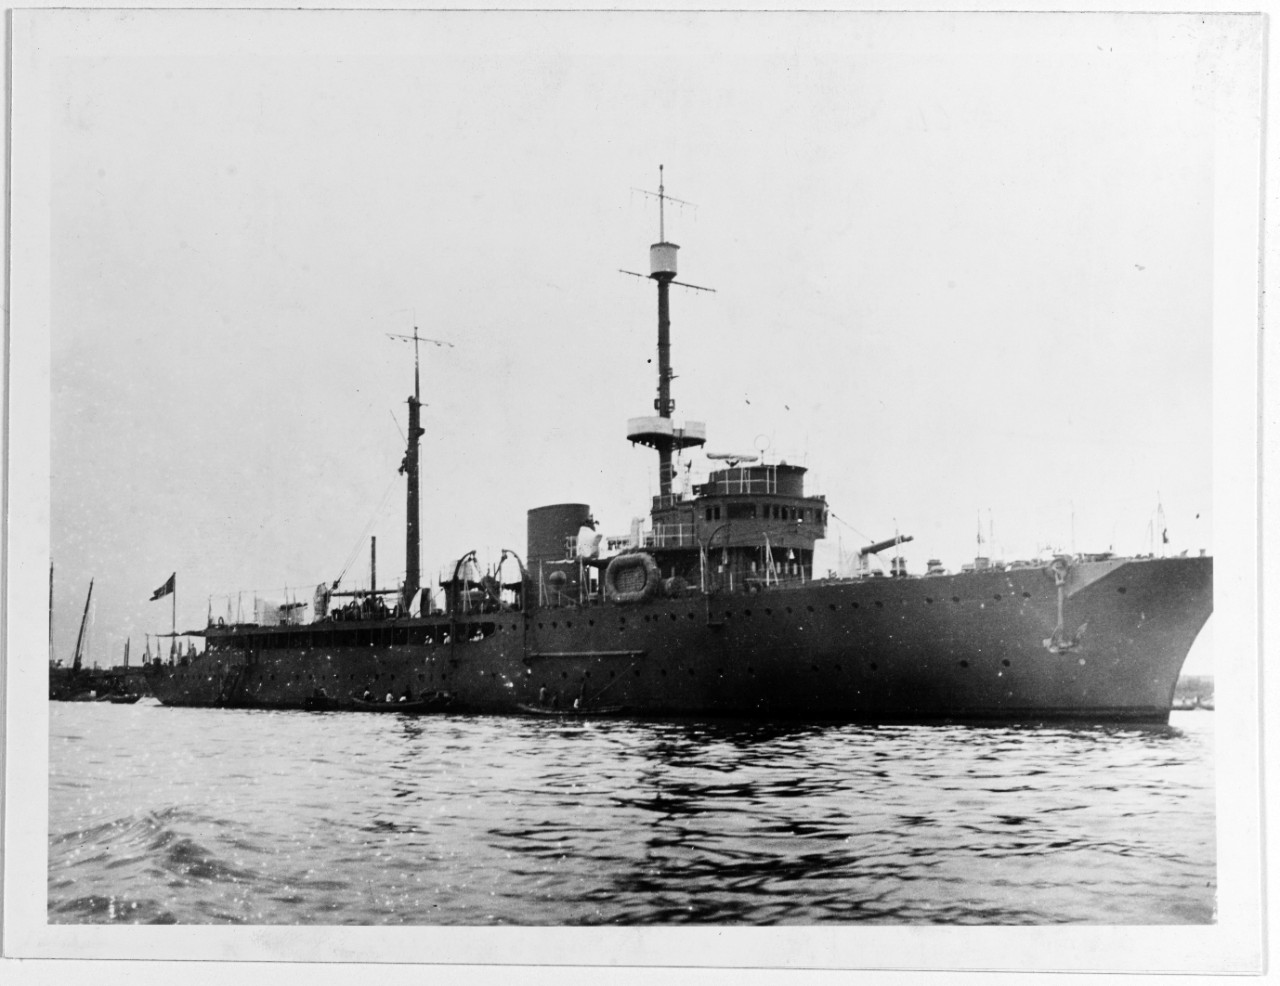 ERITREA (Italian colonial sloop, 1936-1966)